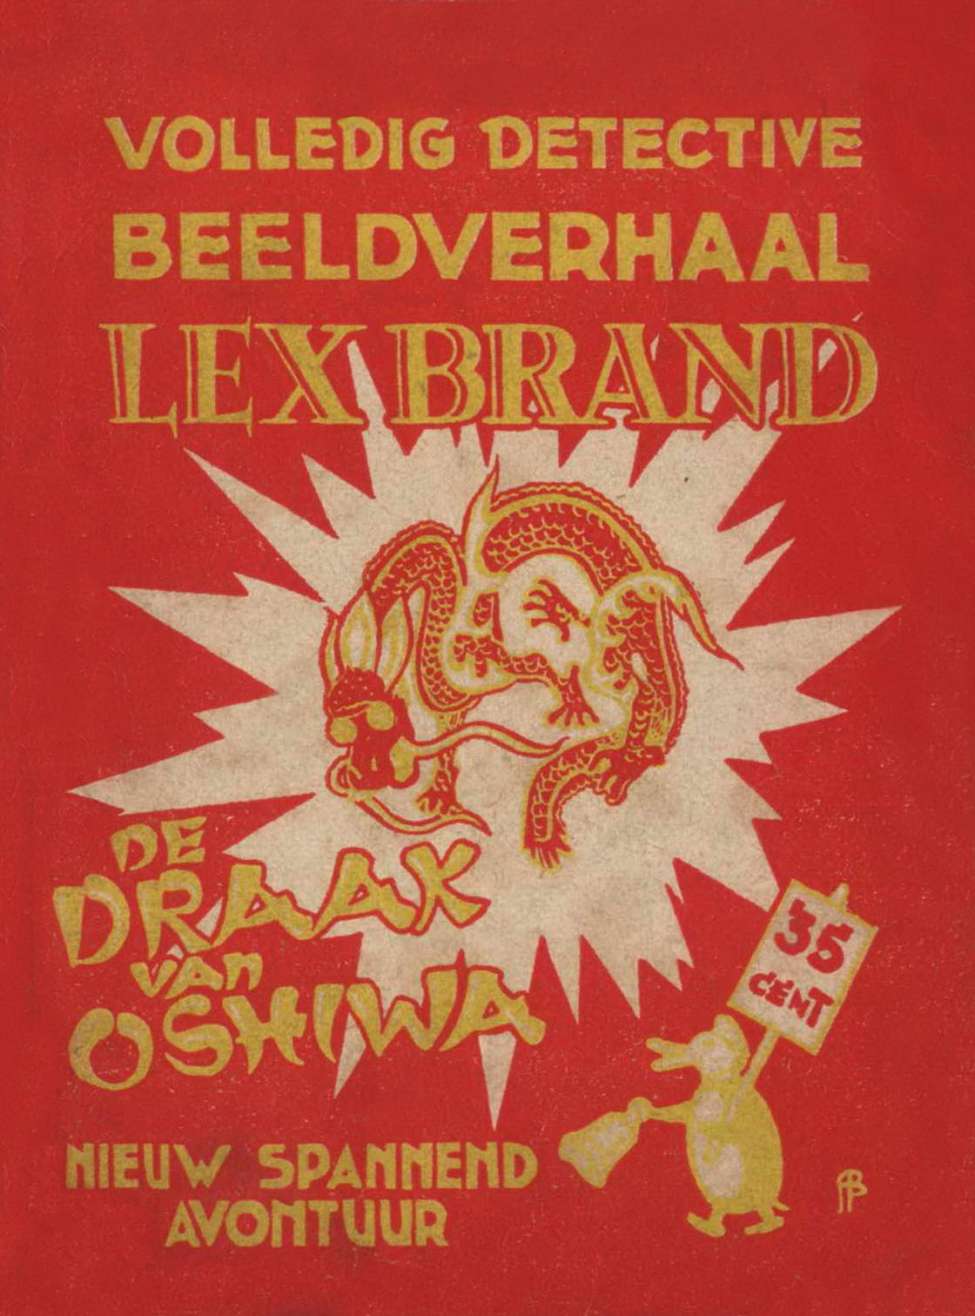 Book Cover For Lex Brand 22 - De Draak Van Oshiwa